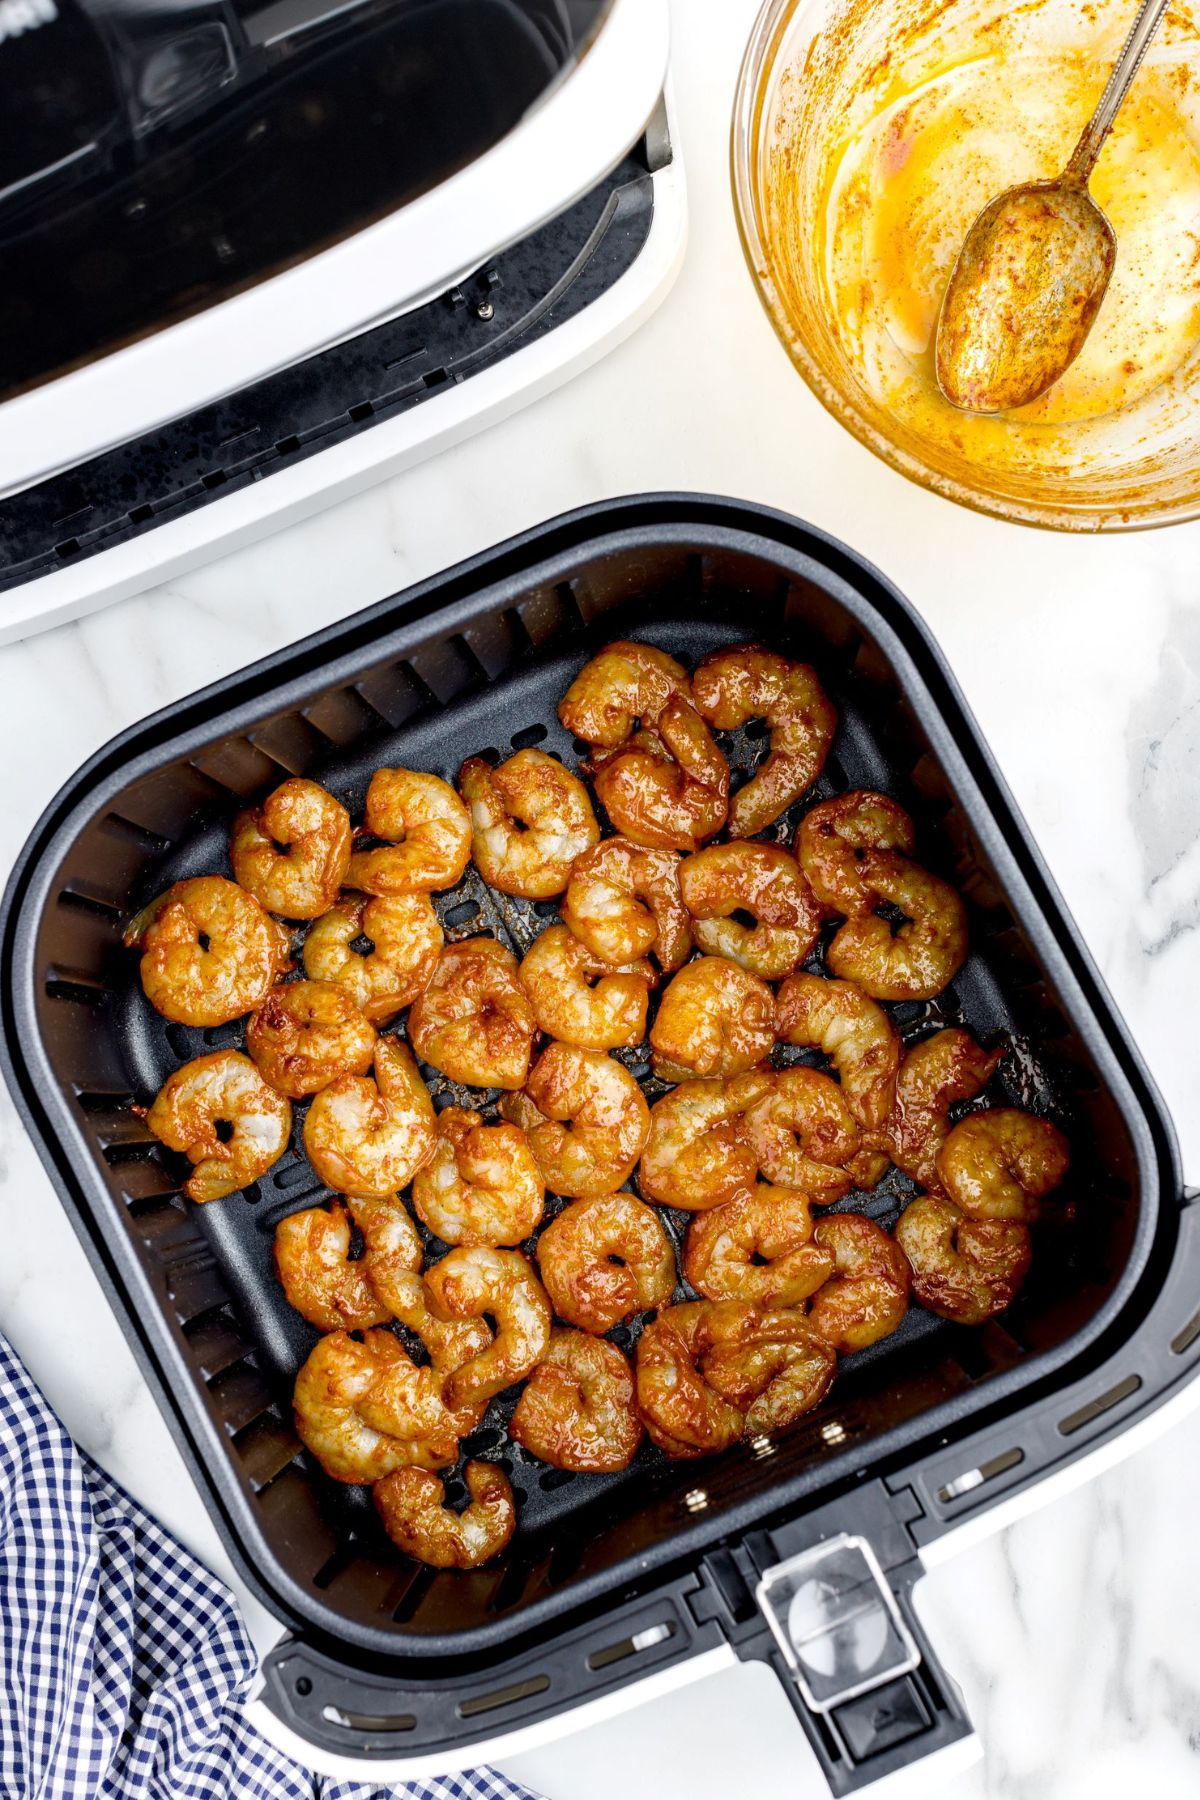 Seasoned shrimp in the air fryer basket before being cooked